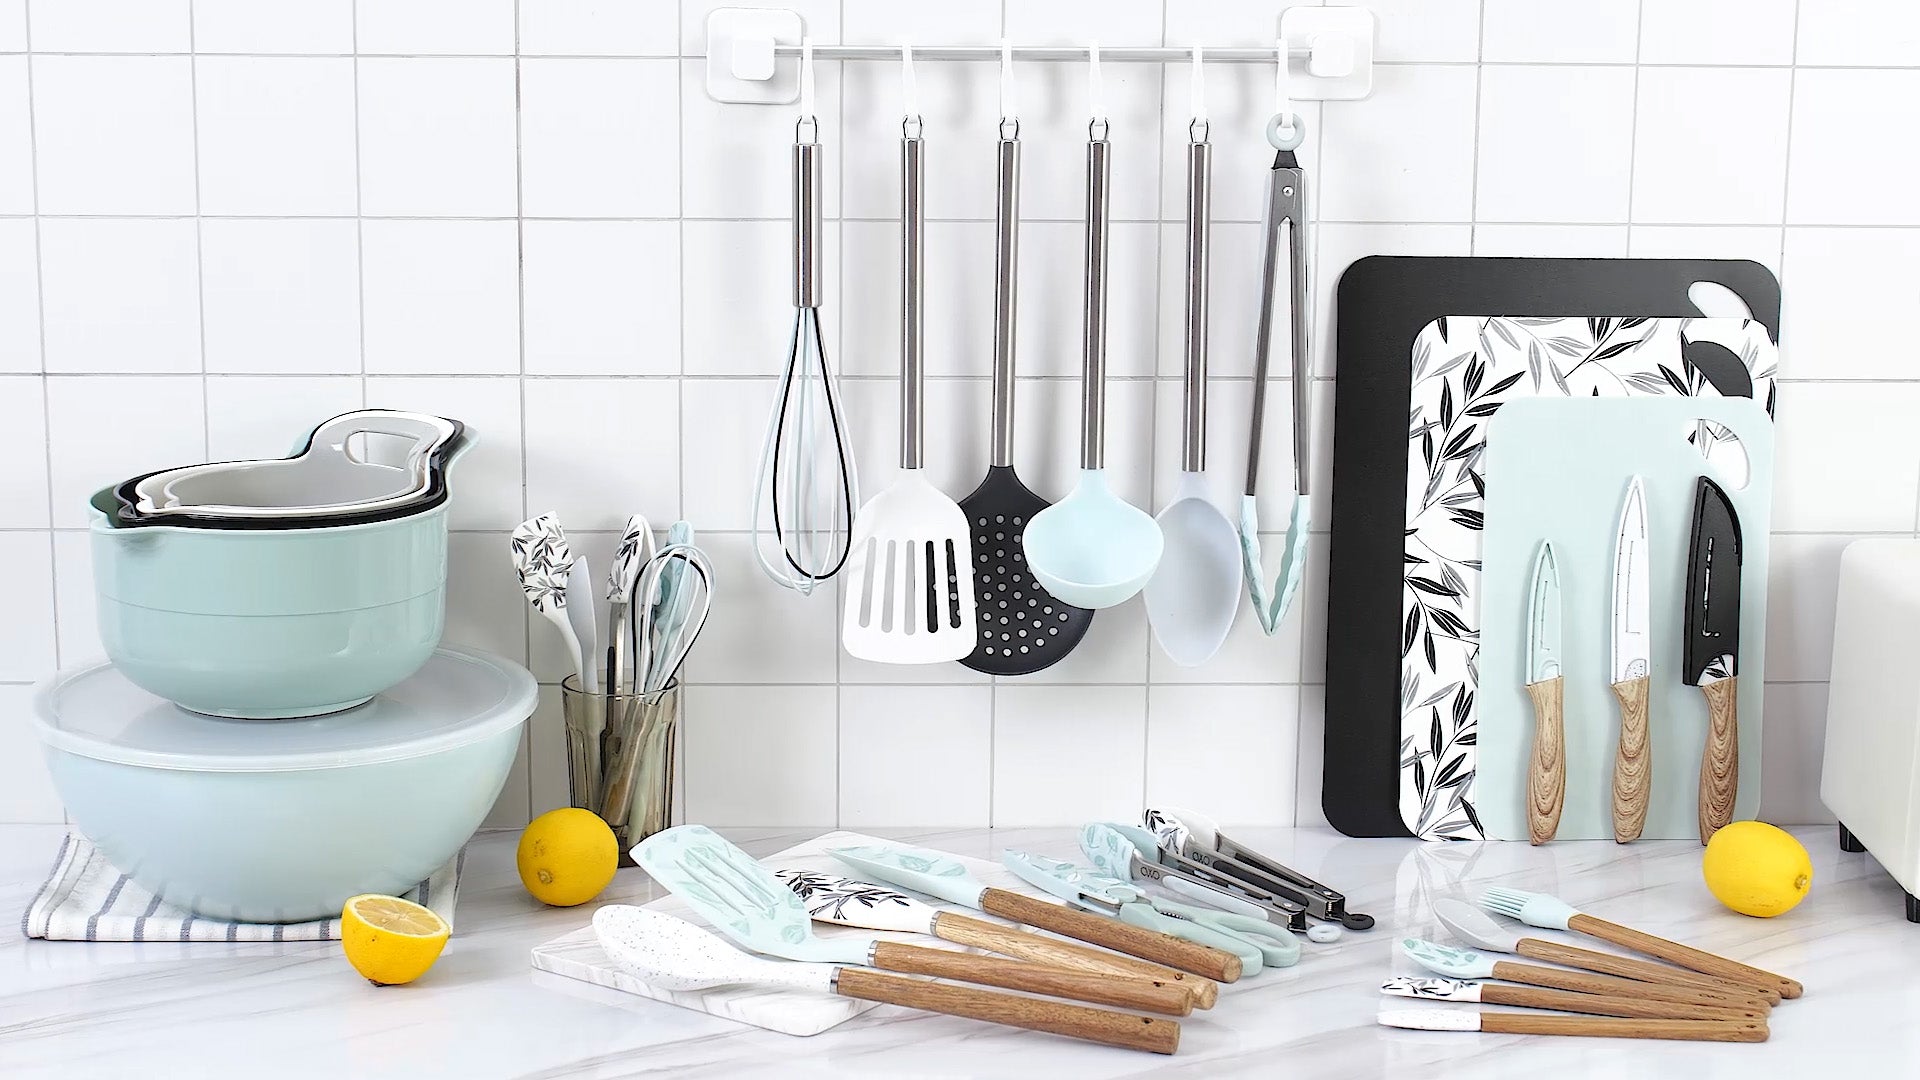 Kitchen utensils, home kitchen tools, mint rubber accessories on